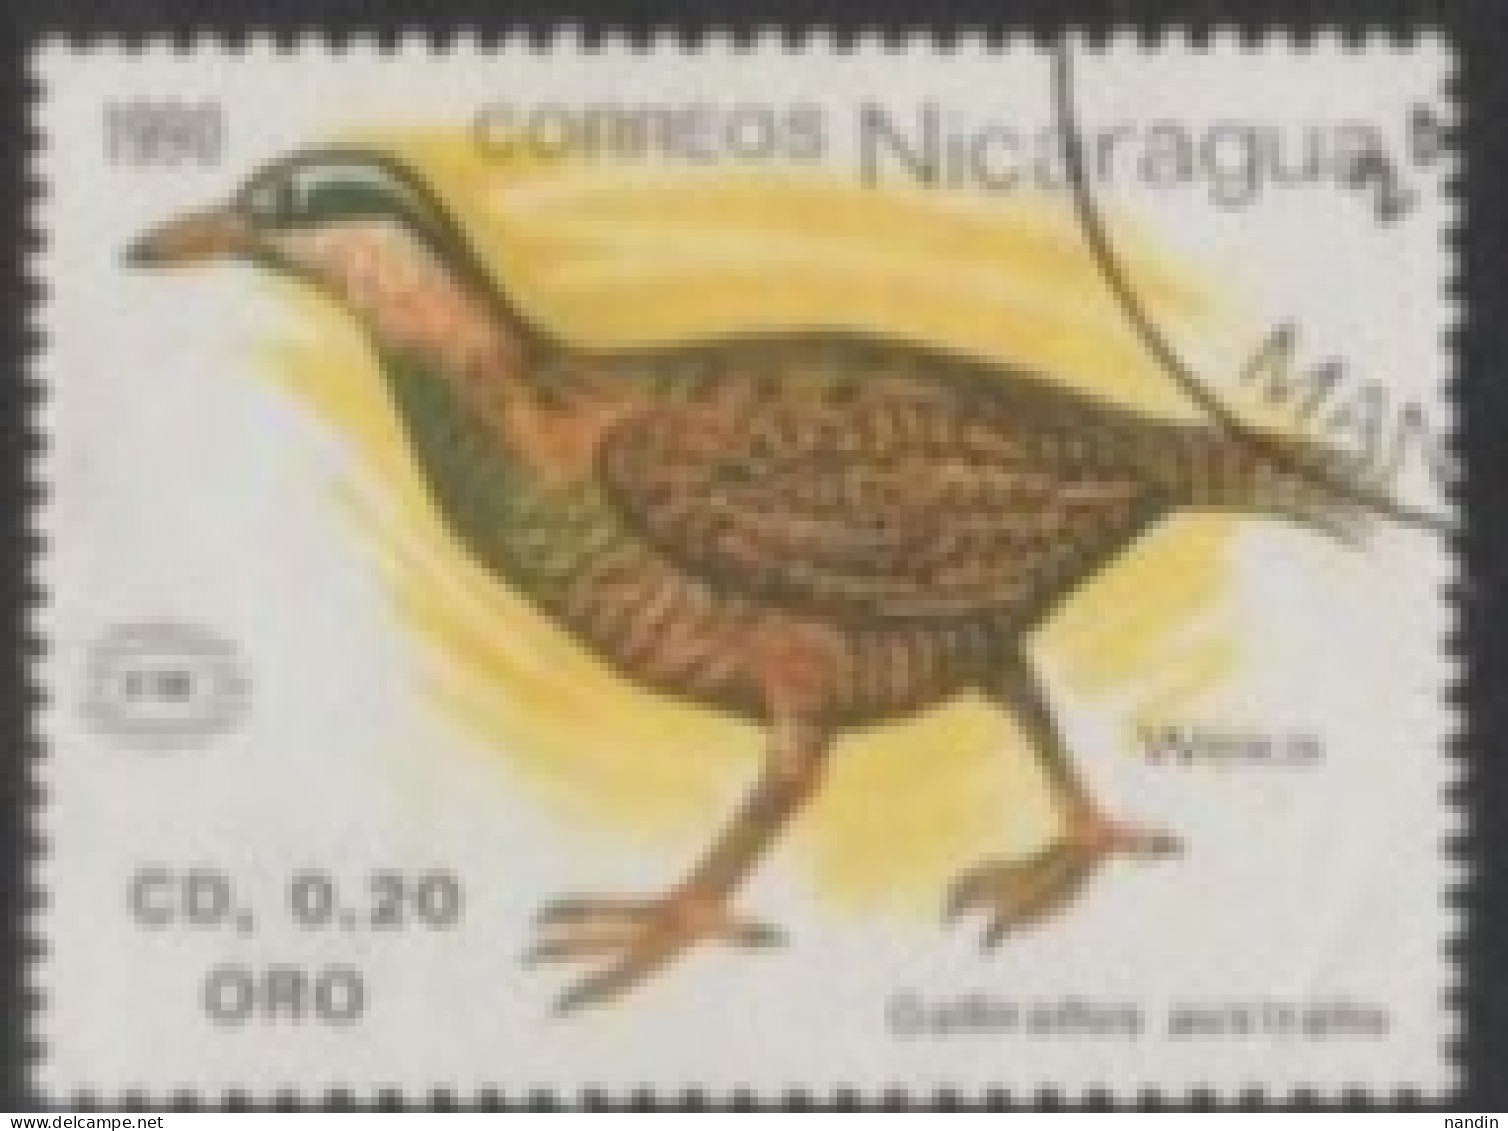 1990 NICARAGUA USED STAMP ON BIRDS/Gallirallus Australis-Genus Of Rails/Int. Stamp Exhibition "NEW ZEALAND '90" BIRD - Colibrì